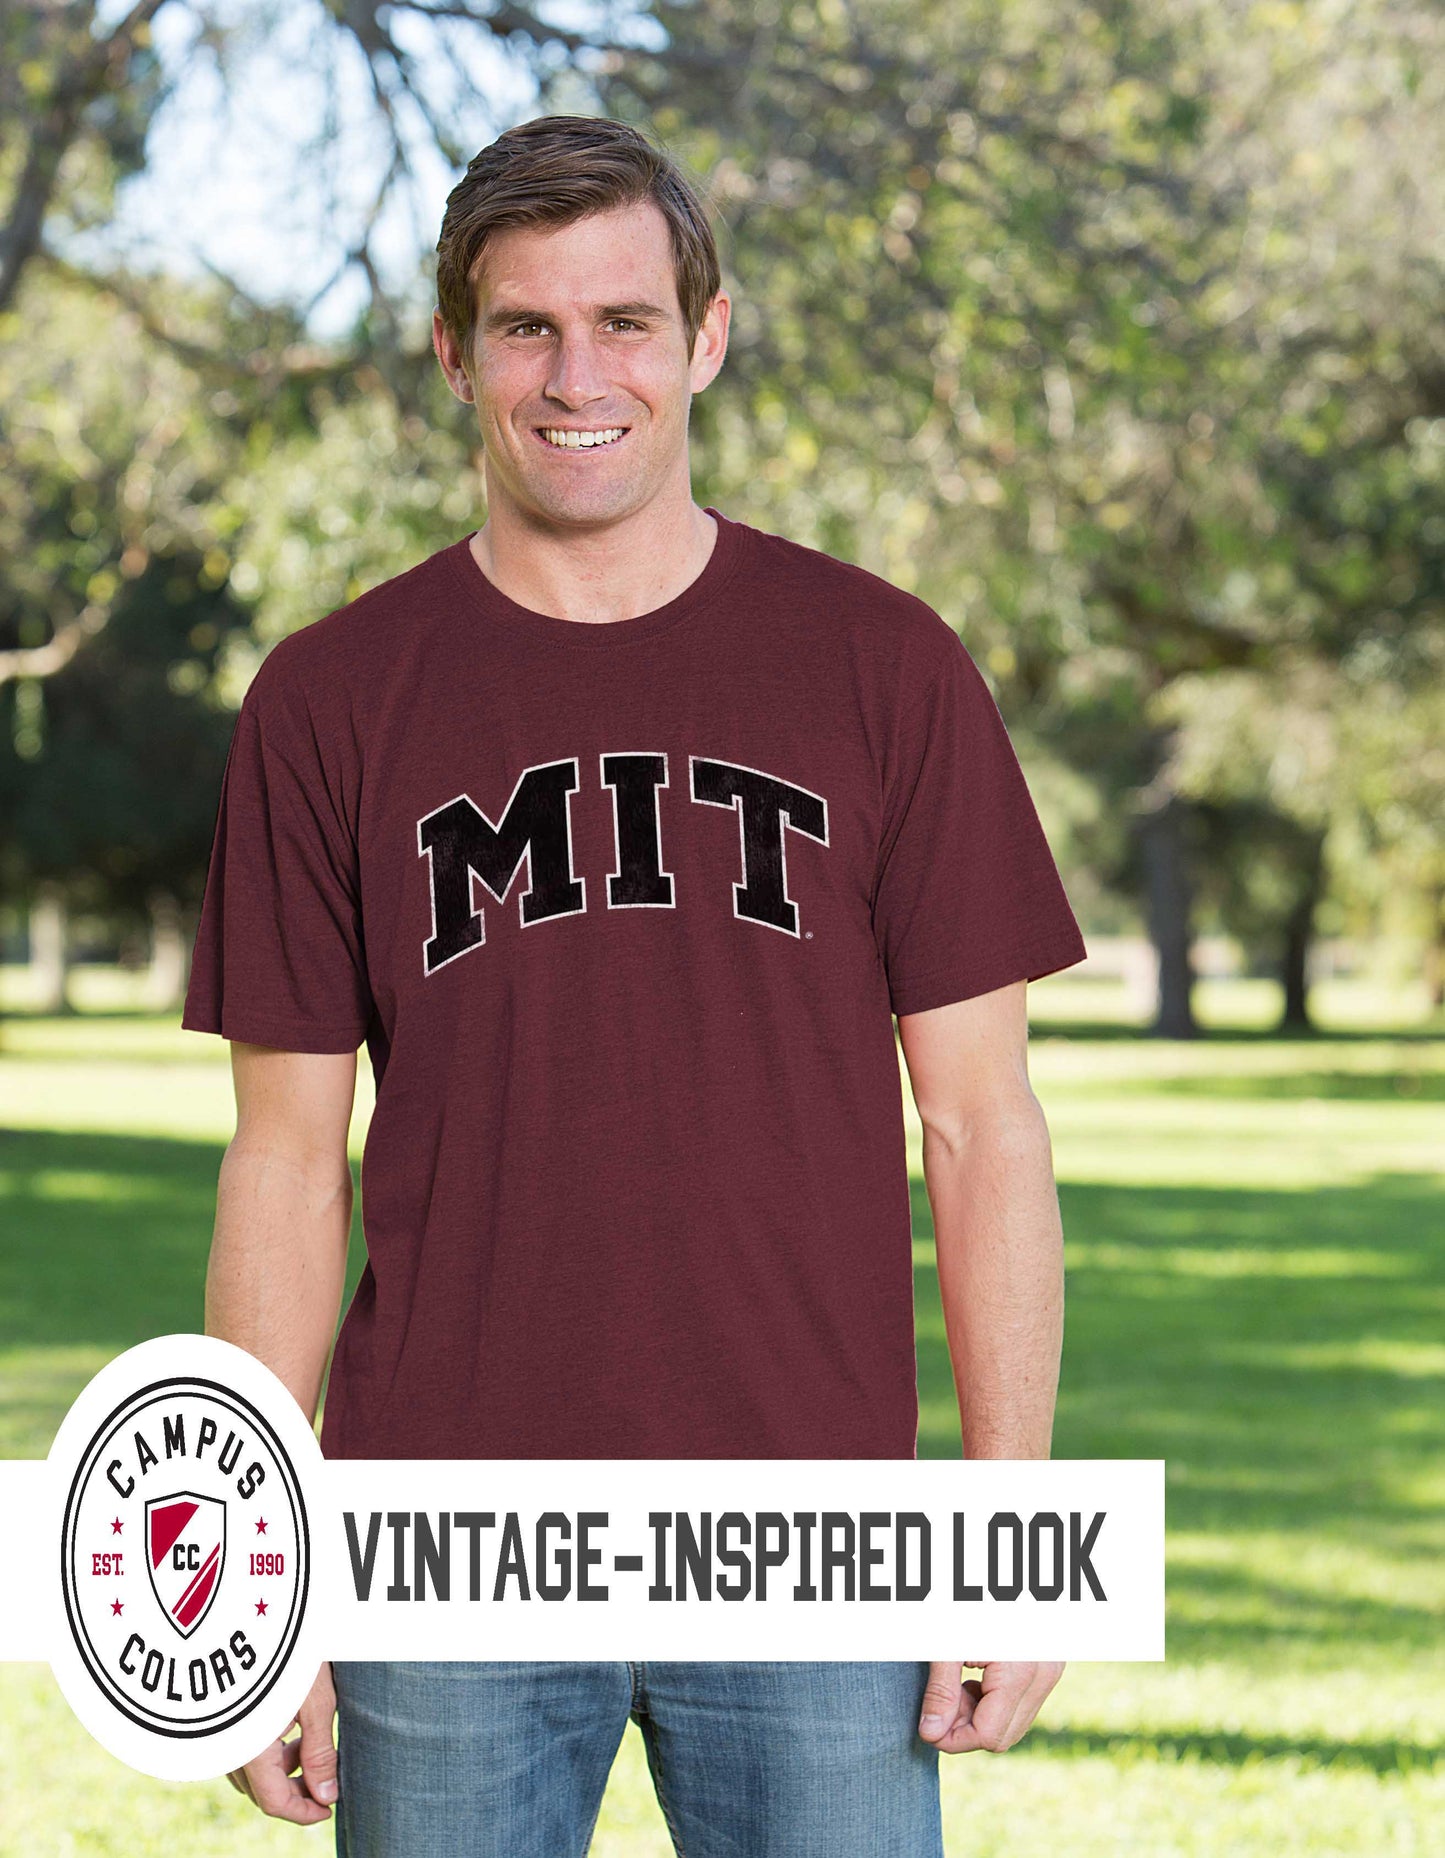 MIT Engineers Adult MVP Heathered Cotton Blend T-Shirt - Maroon